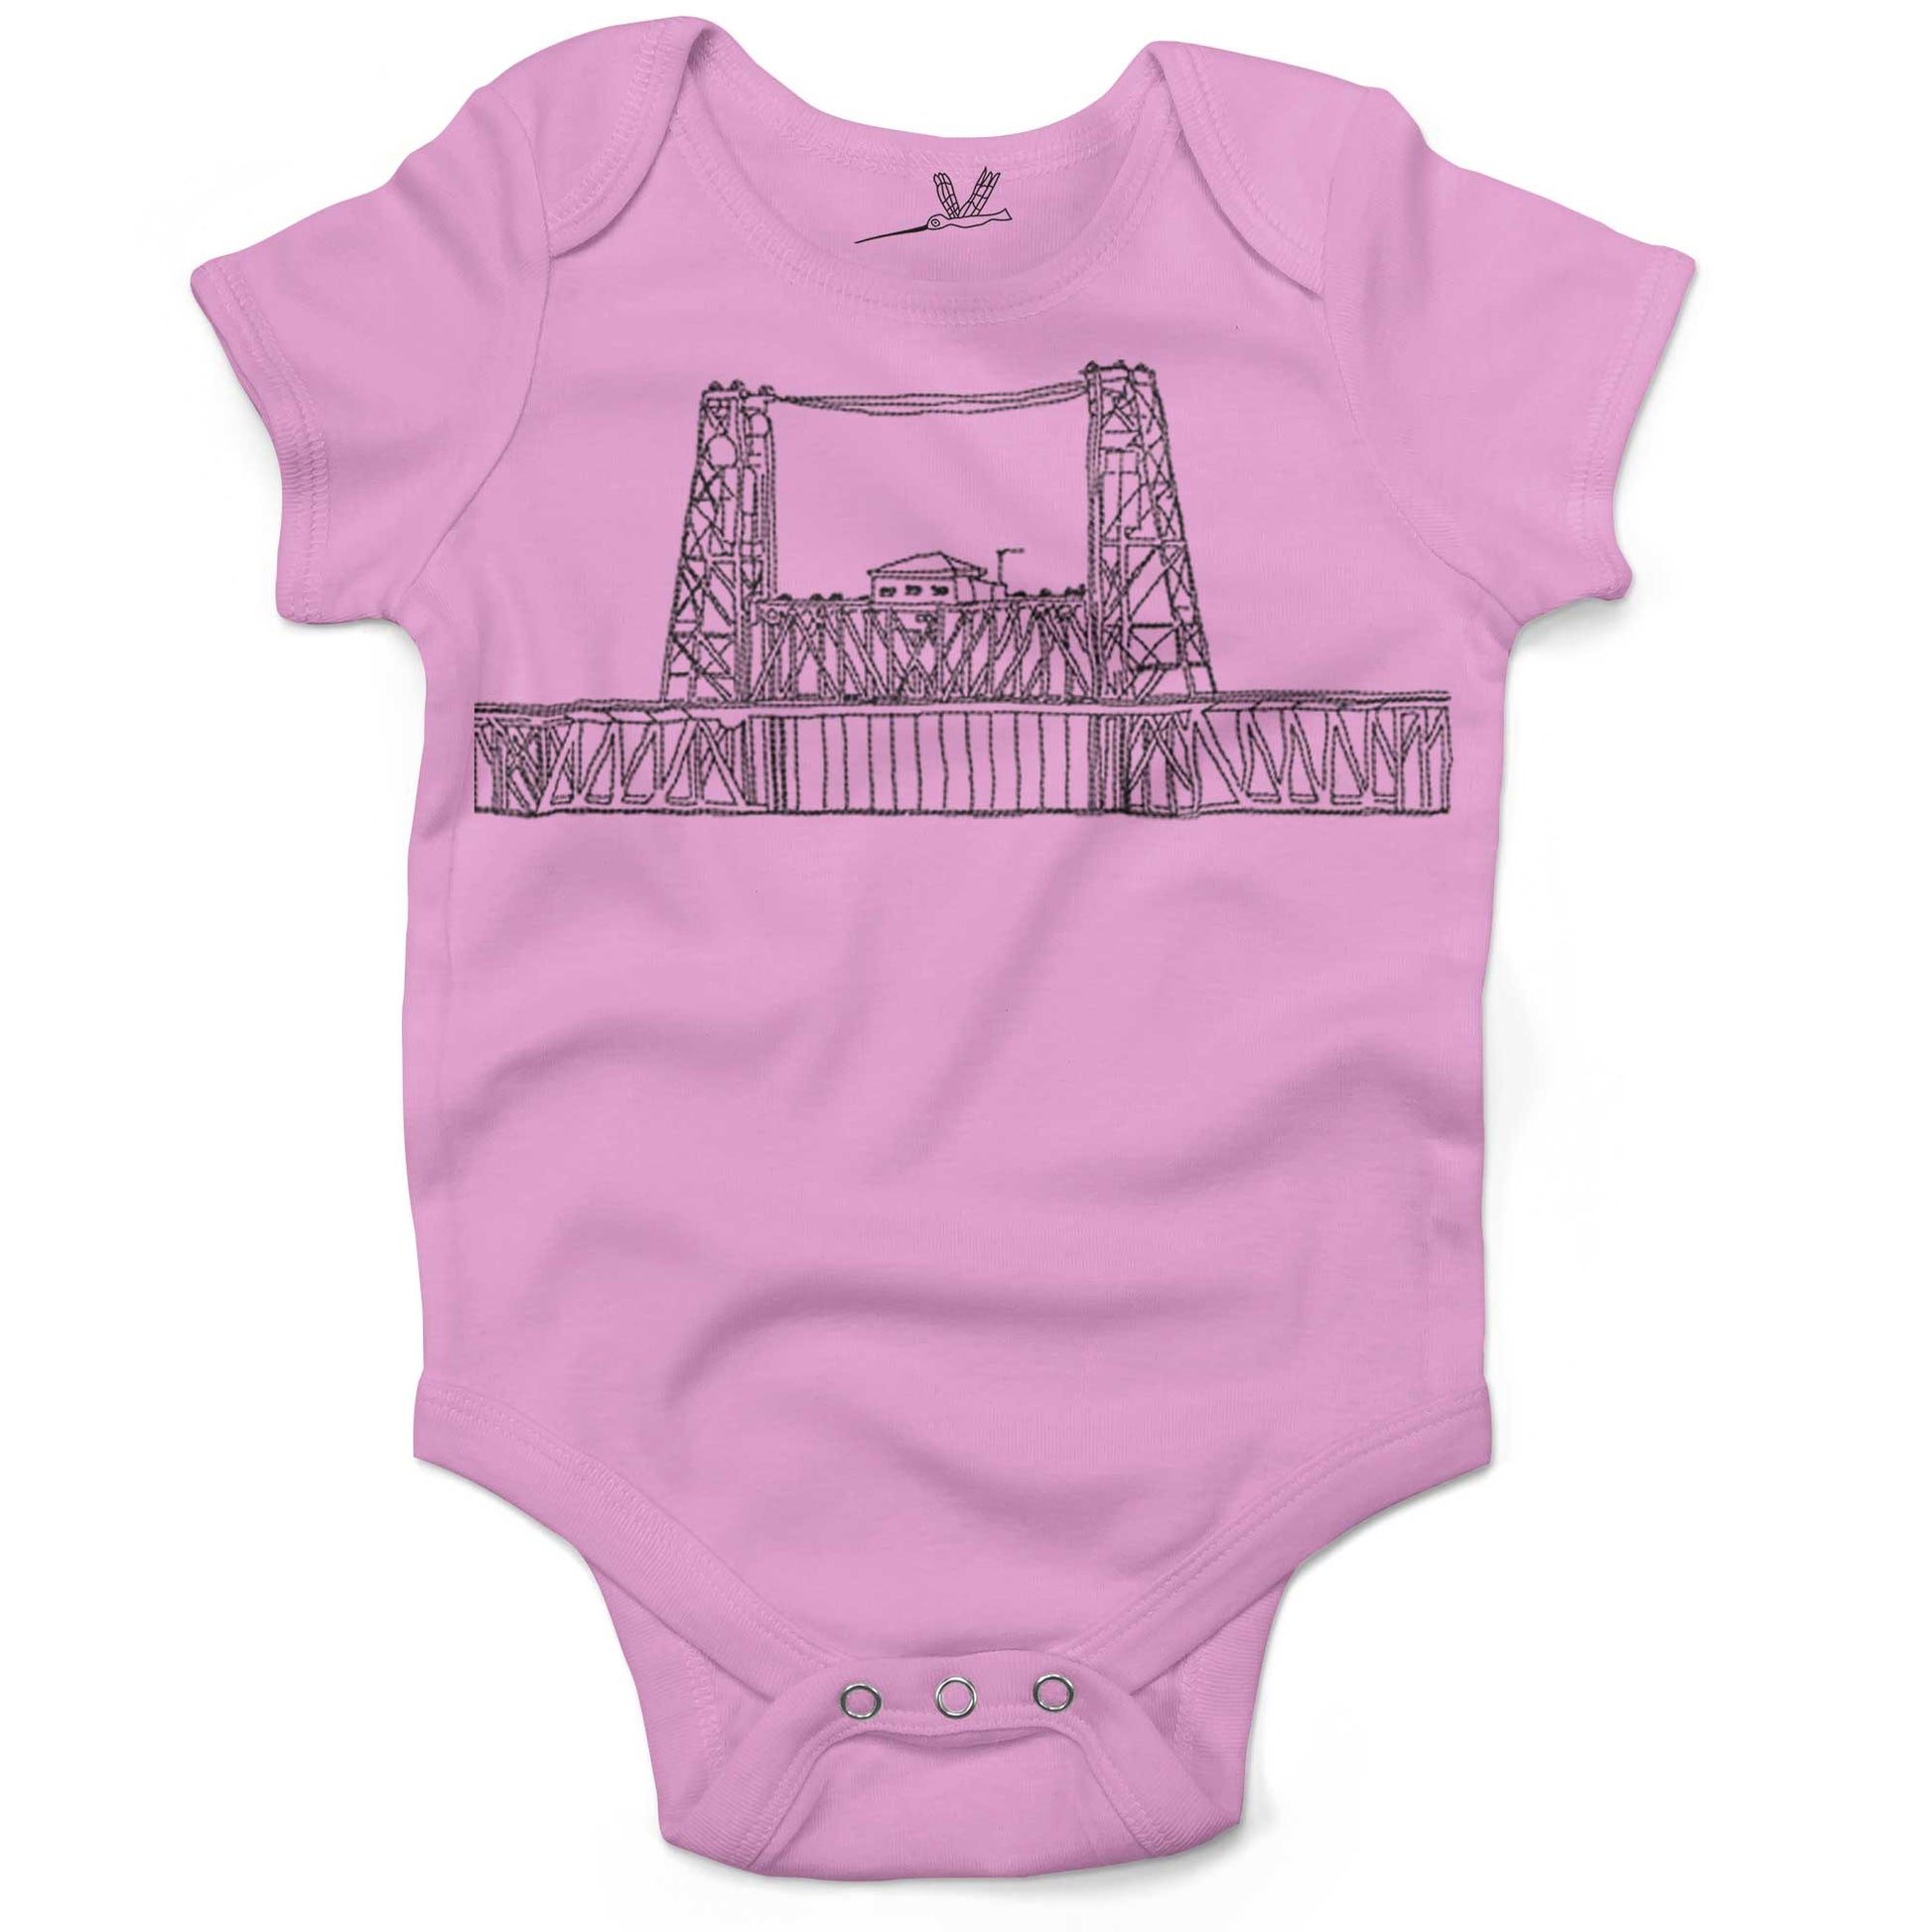 Steel Bridge Infant Bodysuit or Raglan Baby Tee-Organic Pink-3-6 months